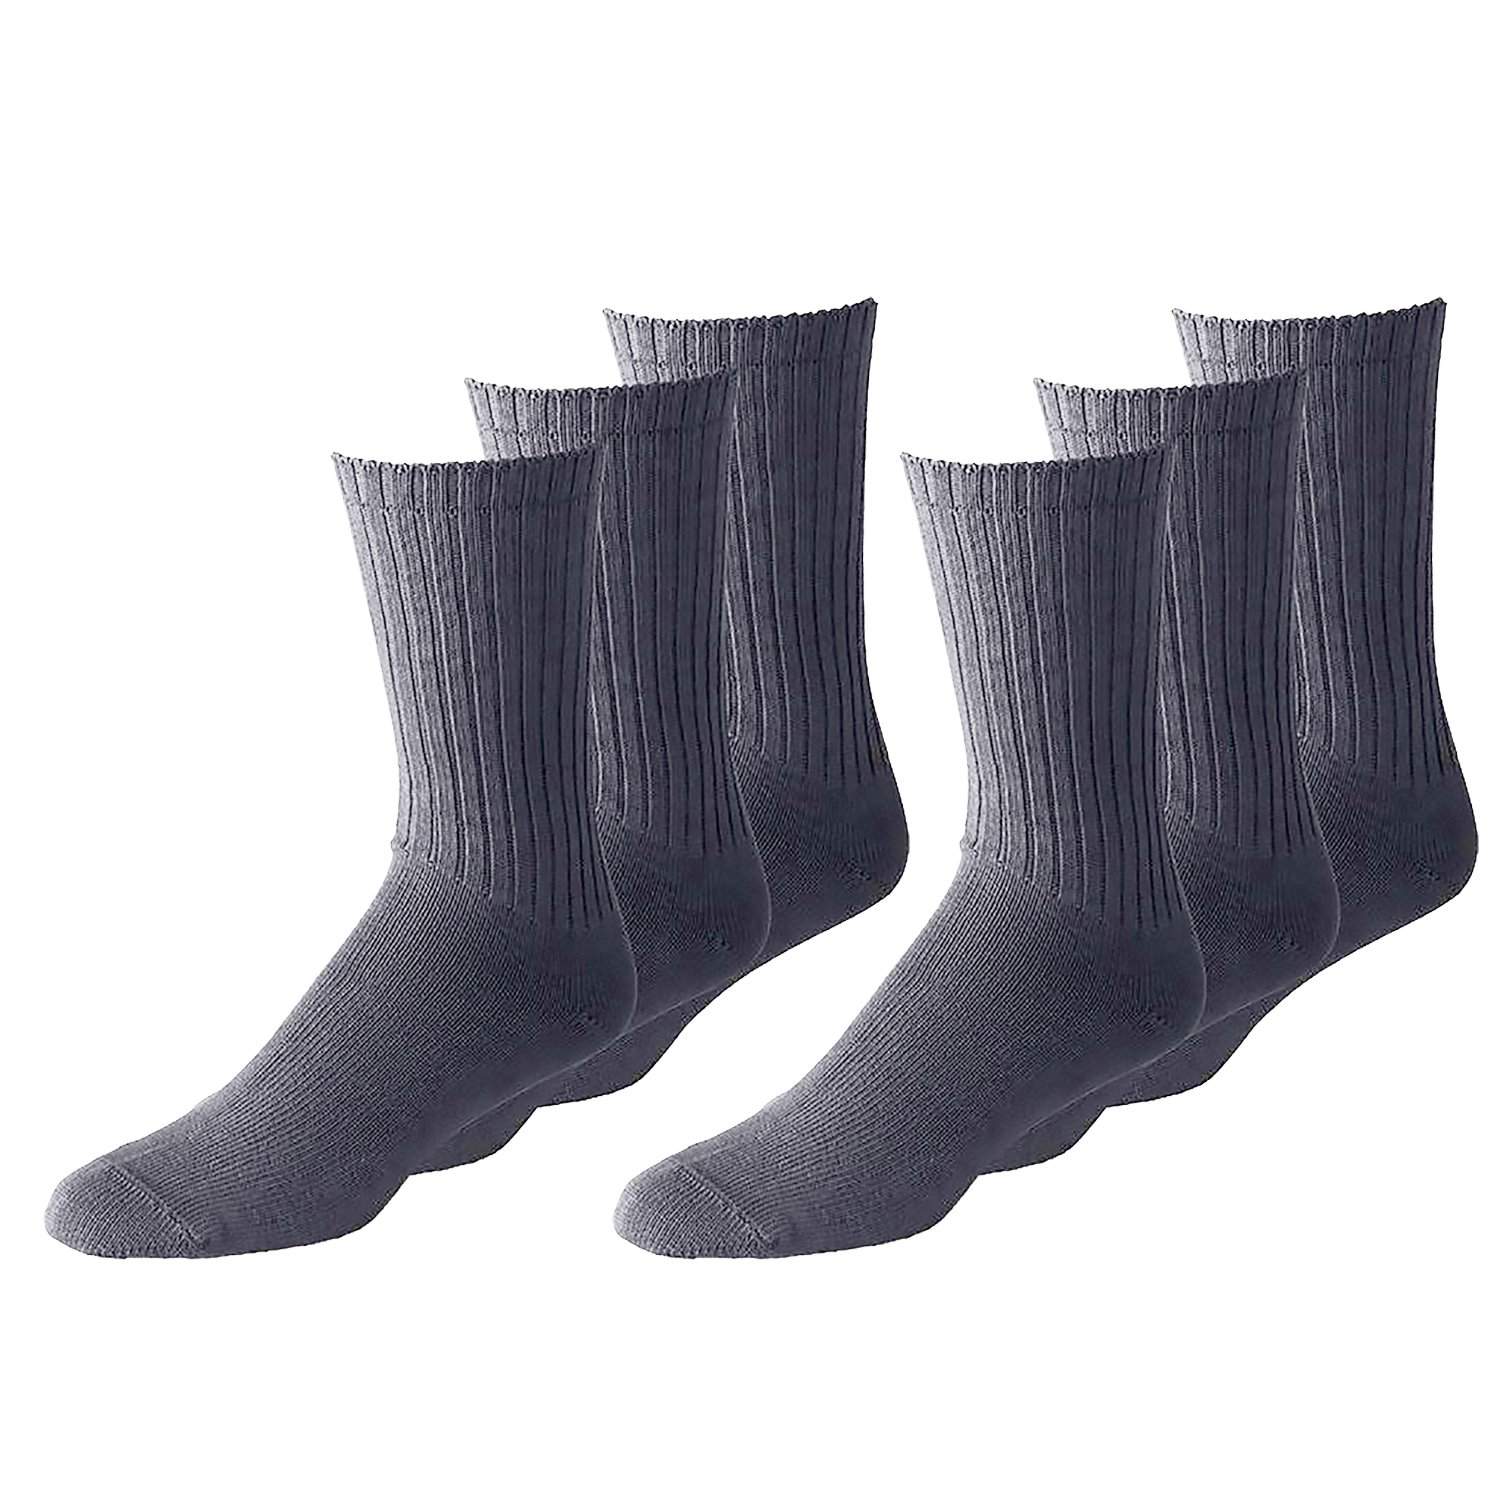 48 Pairs Women's Athletic Crew Socks - Bulk Wholesale Packs - Any Shoe Size